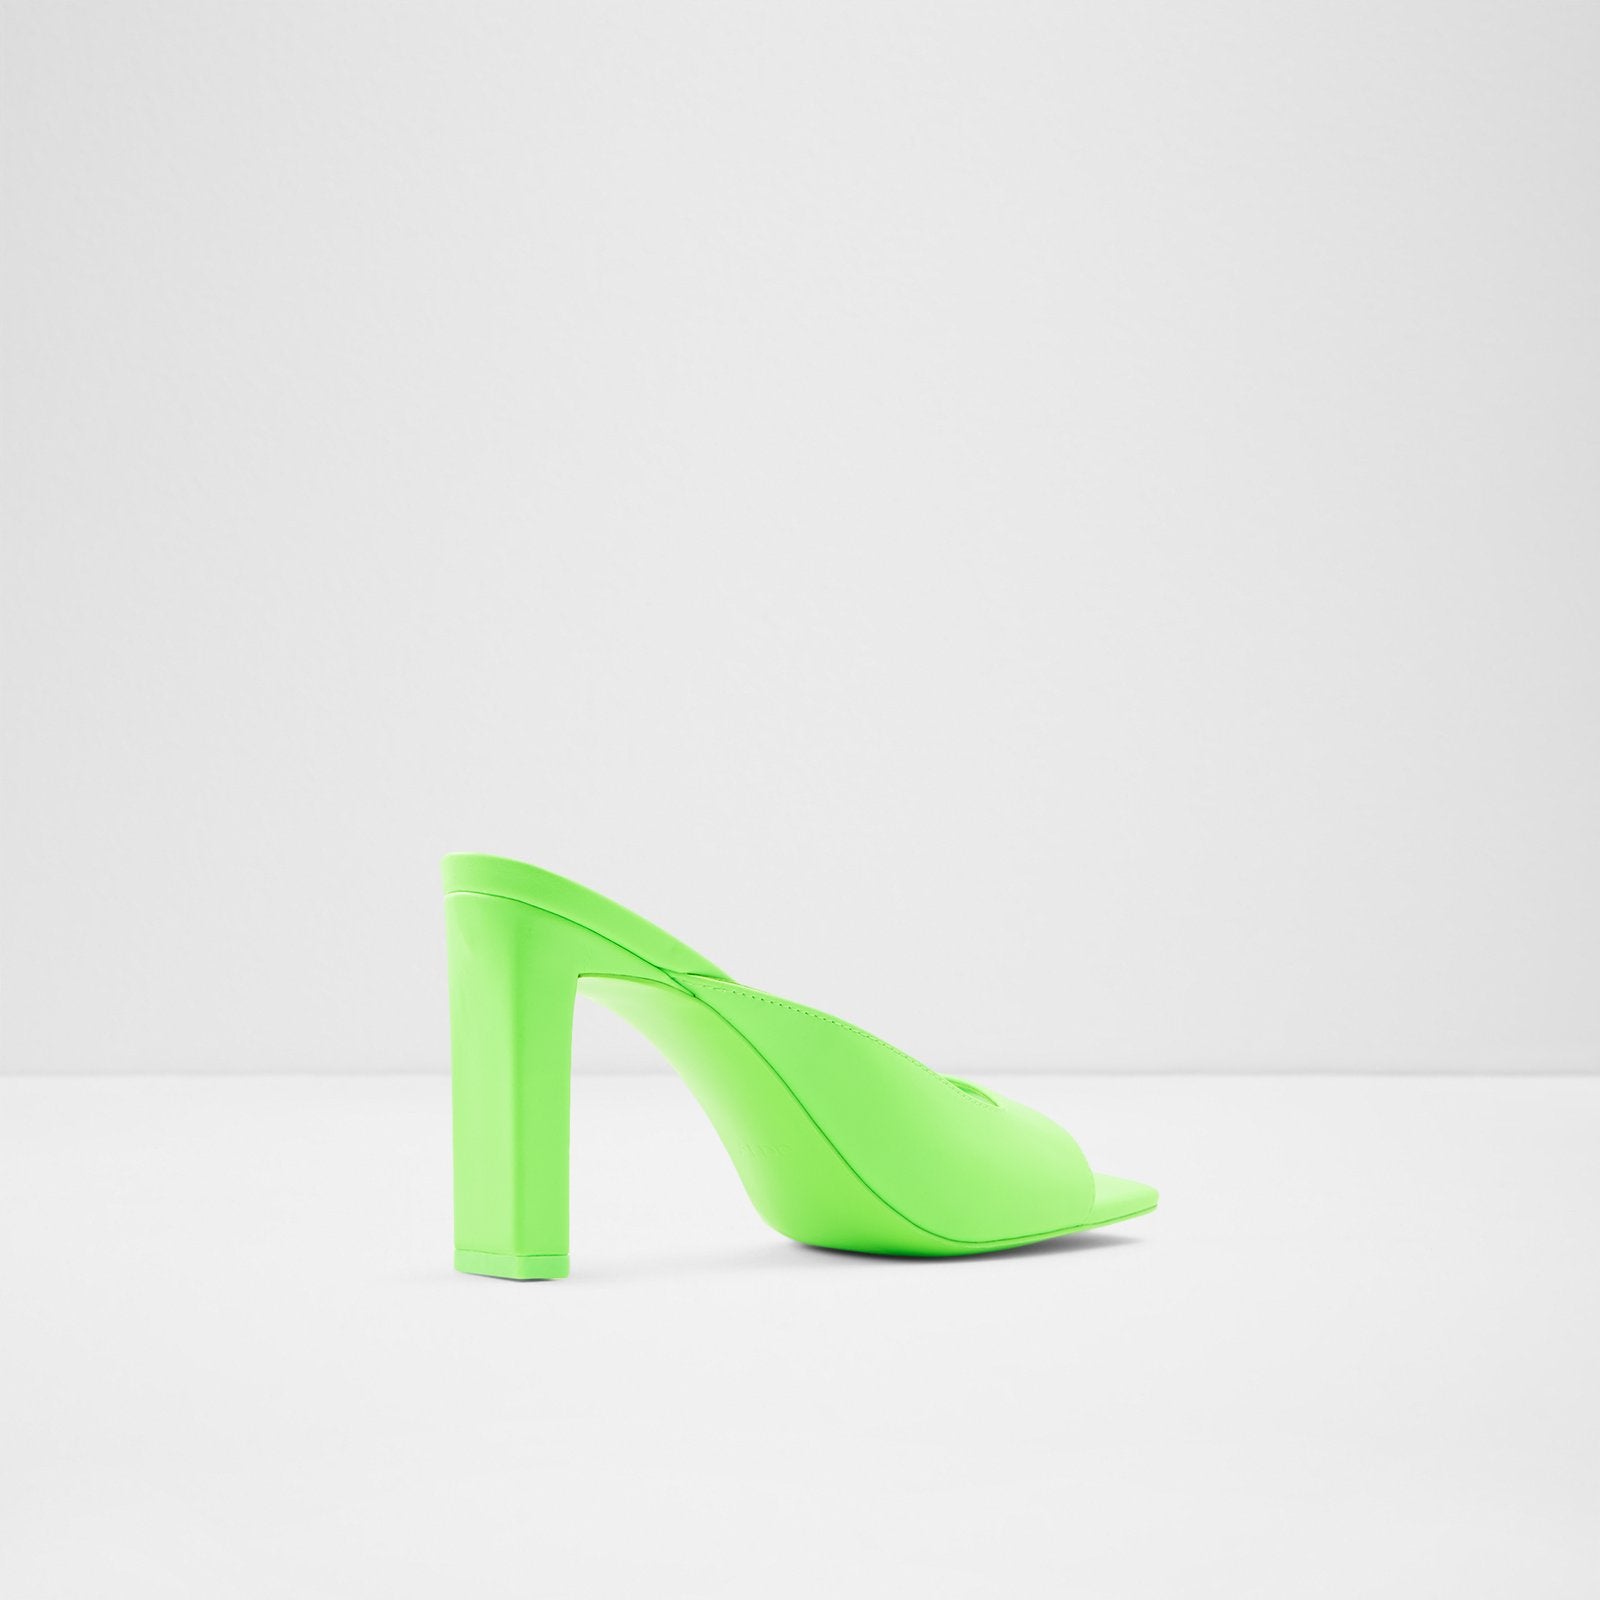 Heatwave Bright Green Faux Snake Print Lace Up Stiletto Heels | SIMMI London